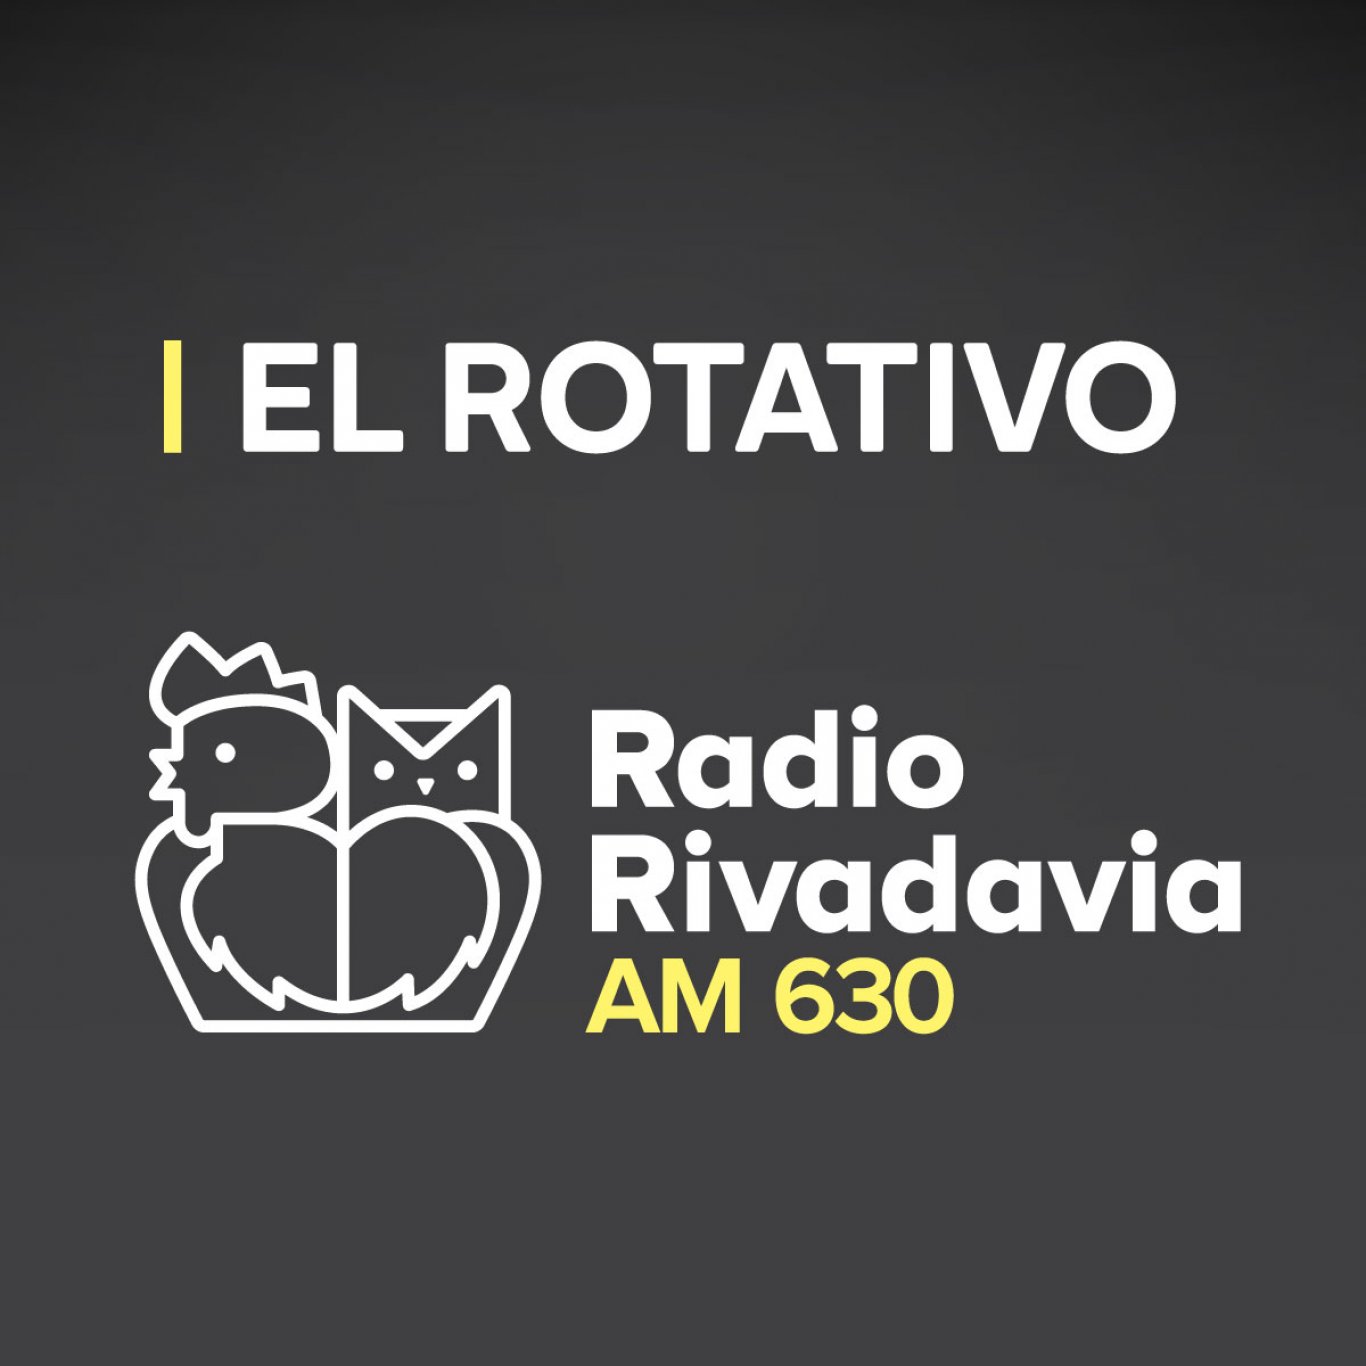 El Rotativo de Radio Rivadavia